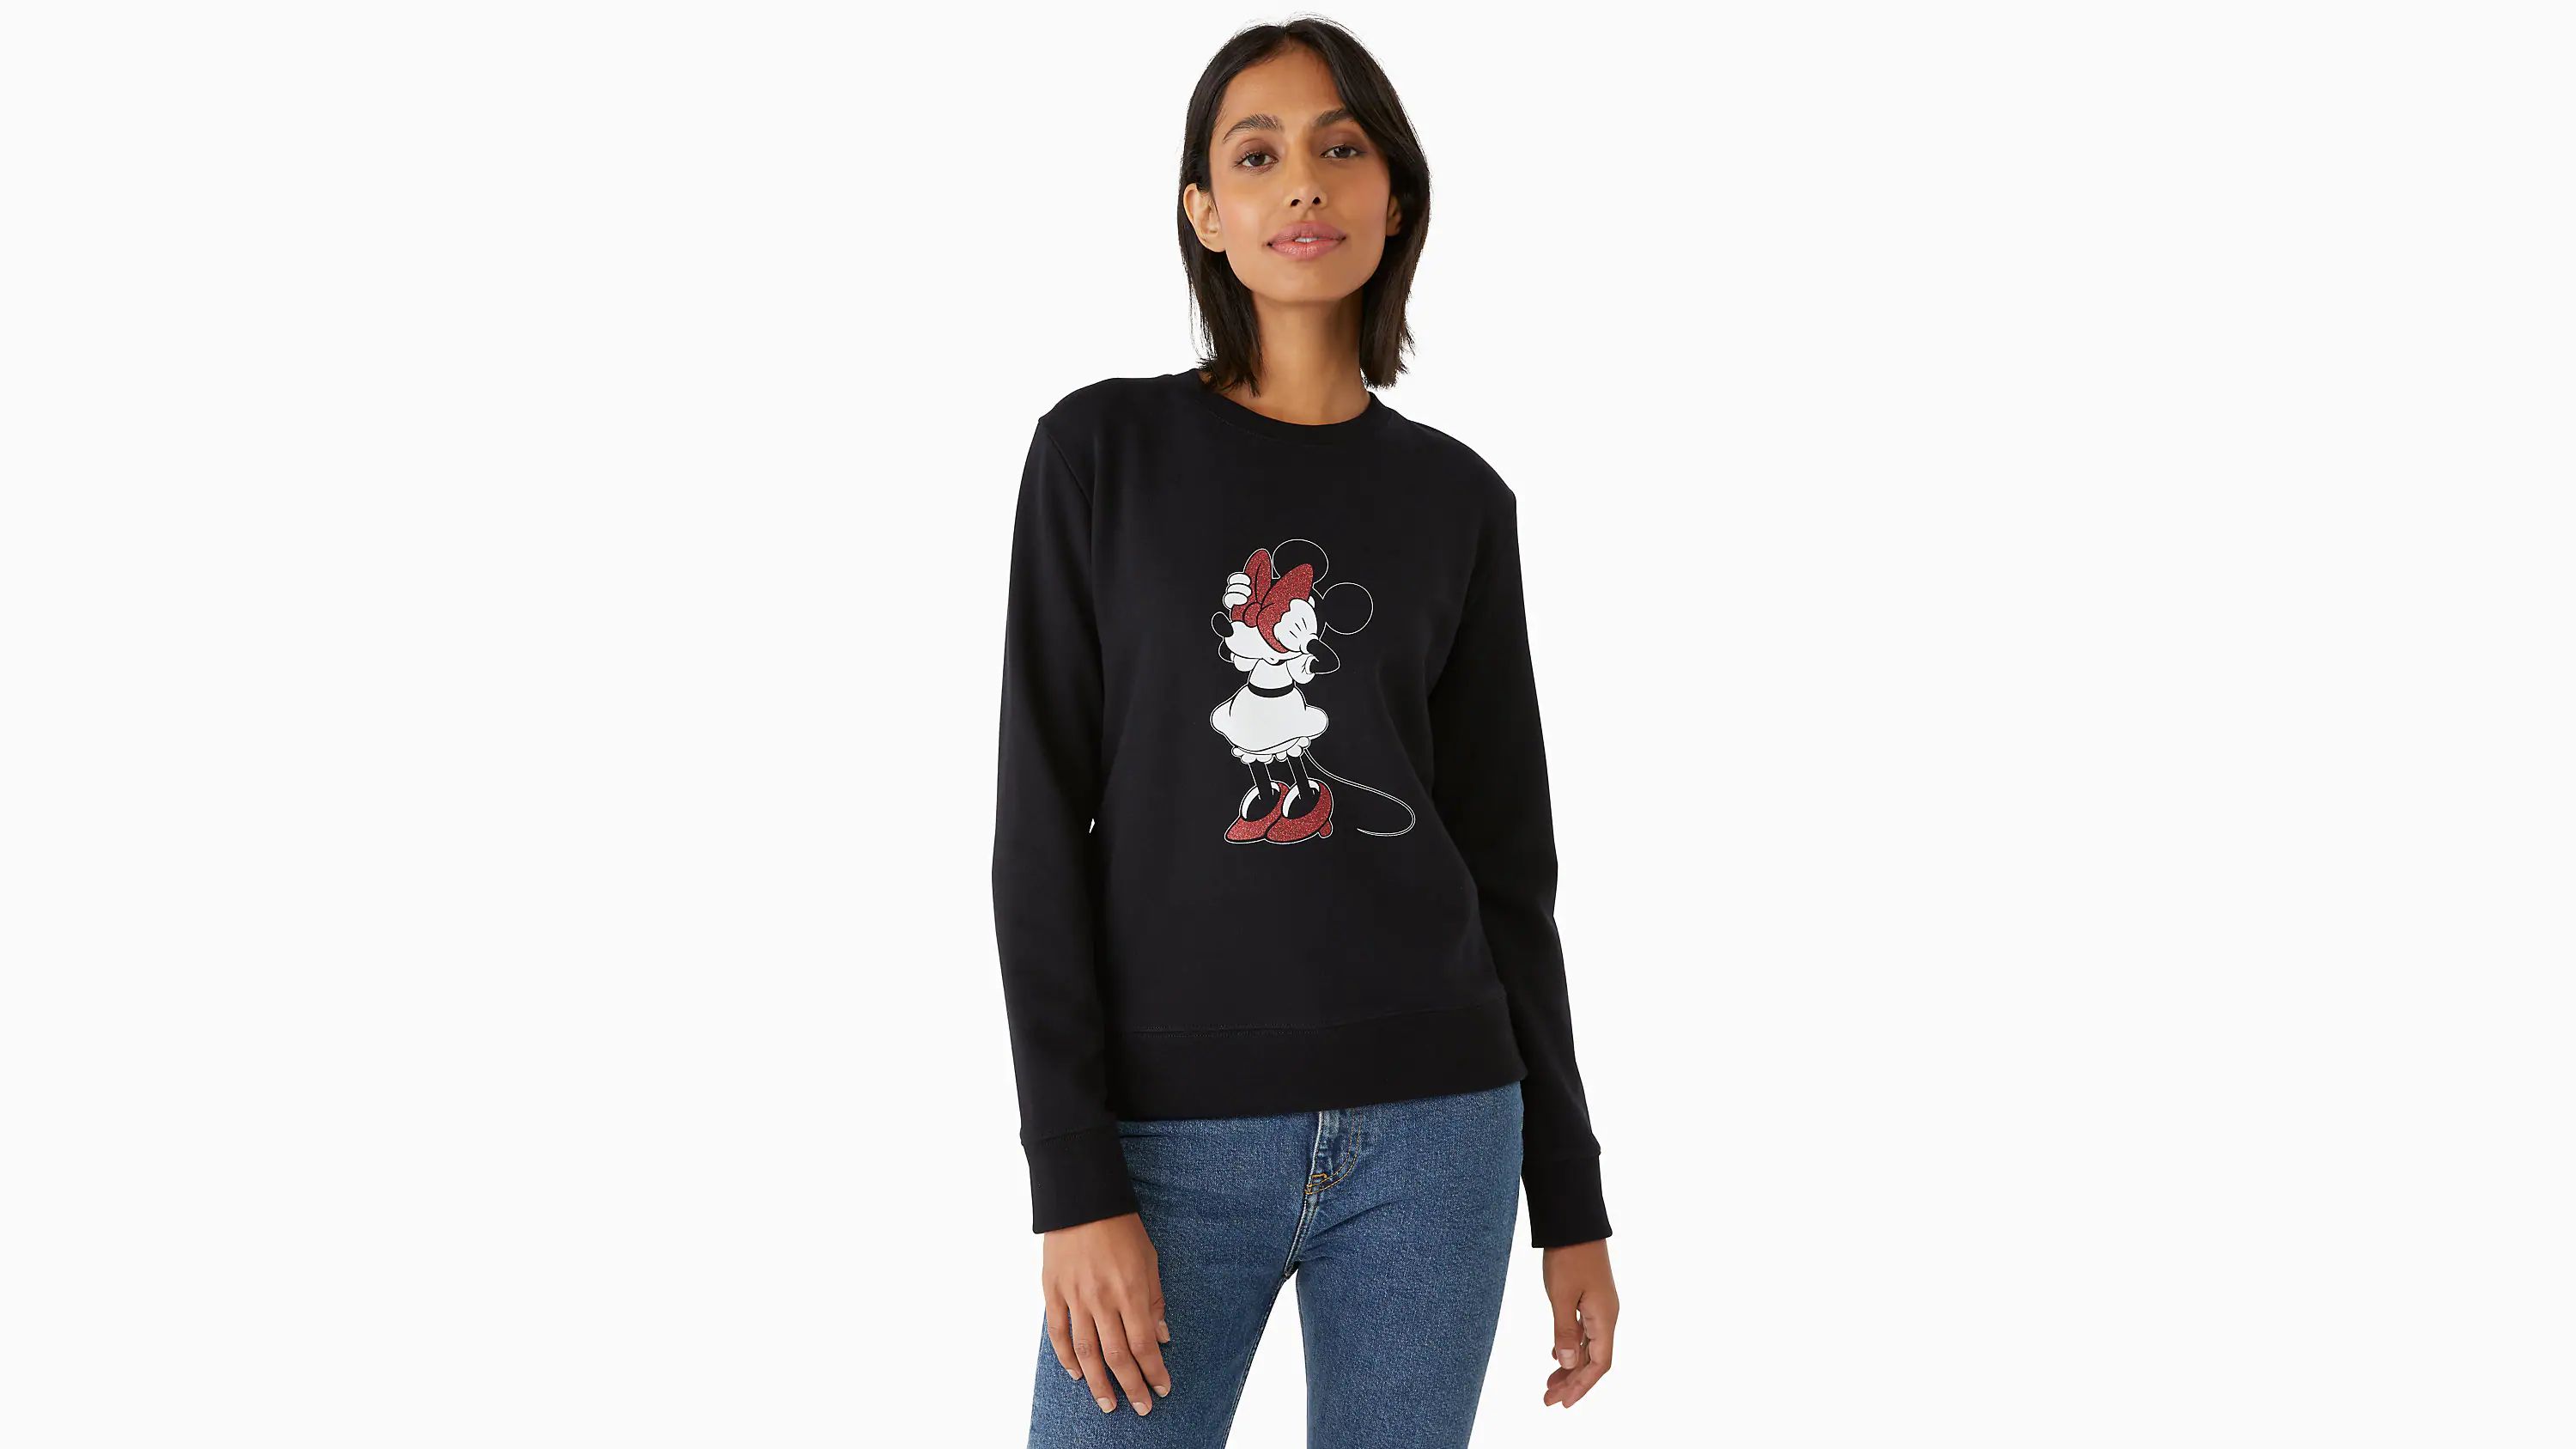 Kate Spade Disney X Kate Spade New York Minnie Mouse Sweatshirt, Black - XL | Kate Spade Outlet